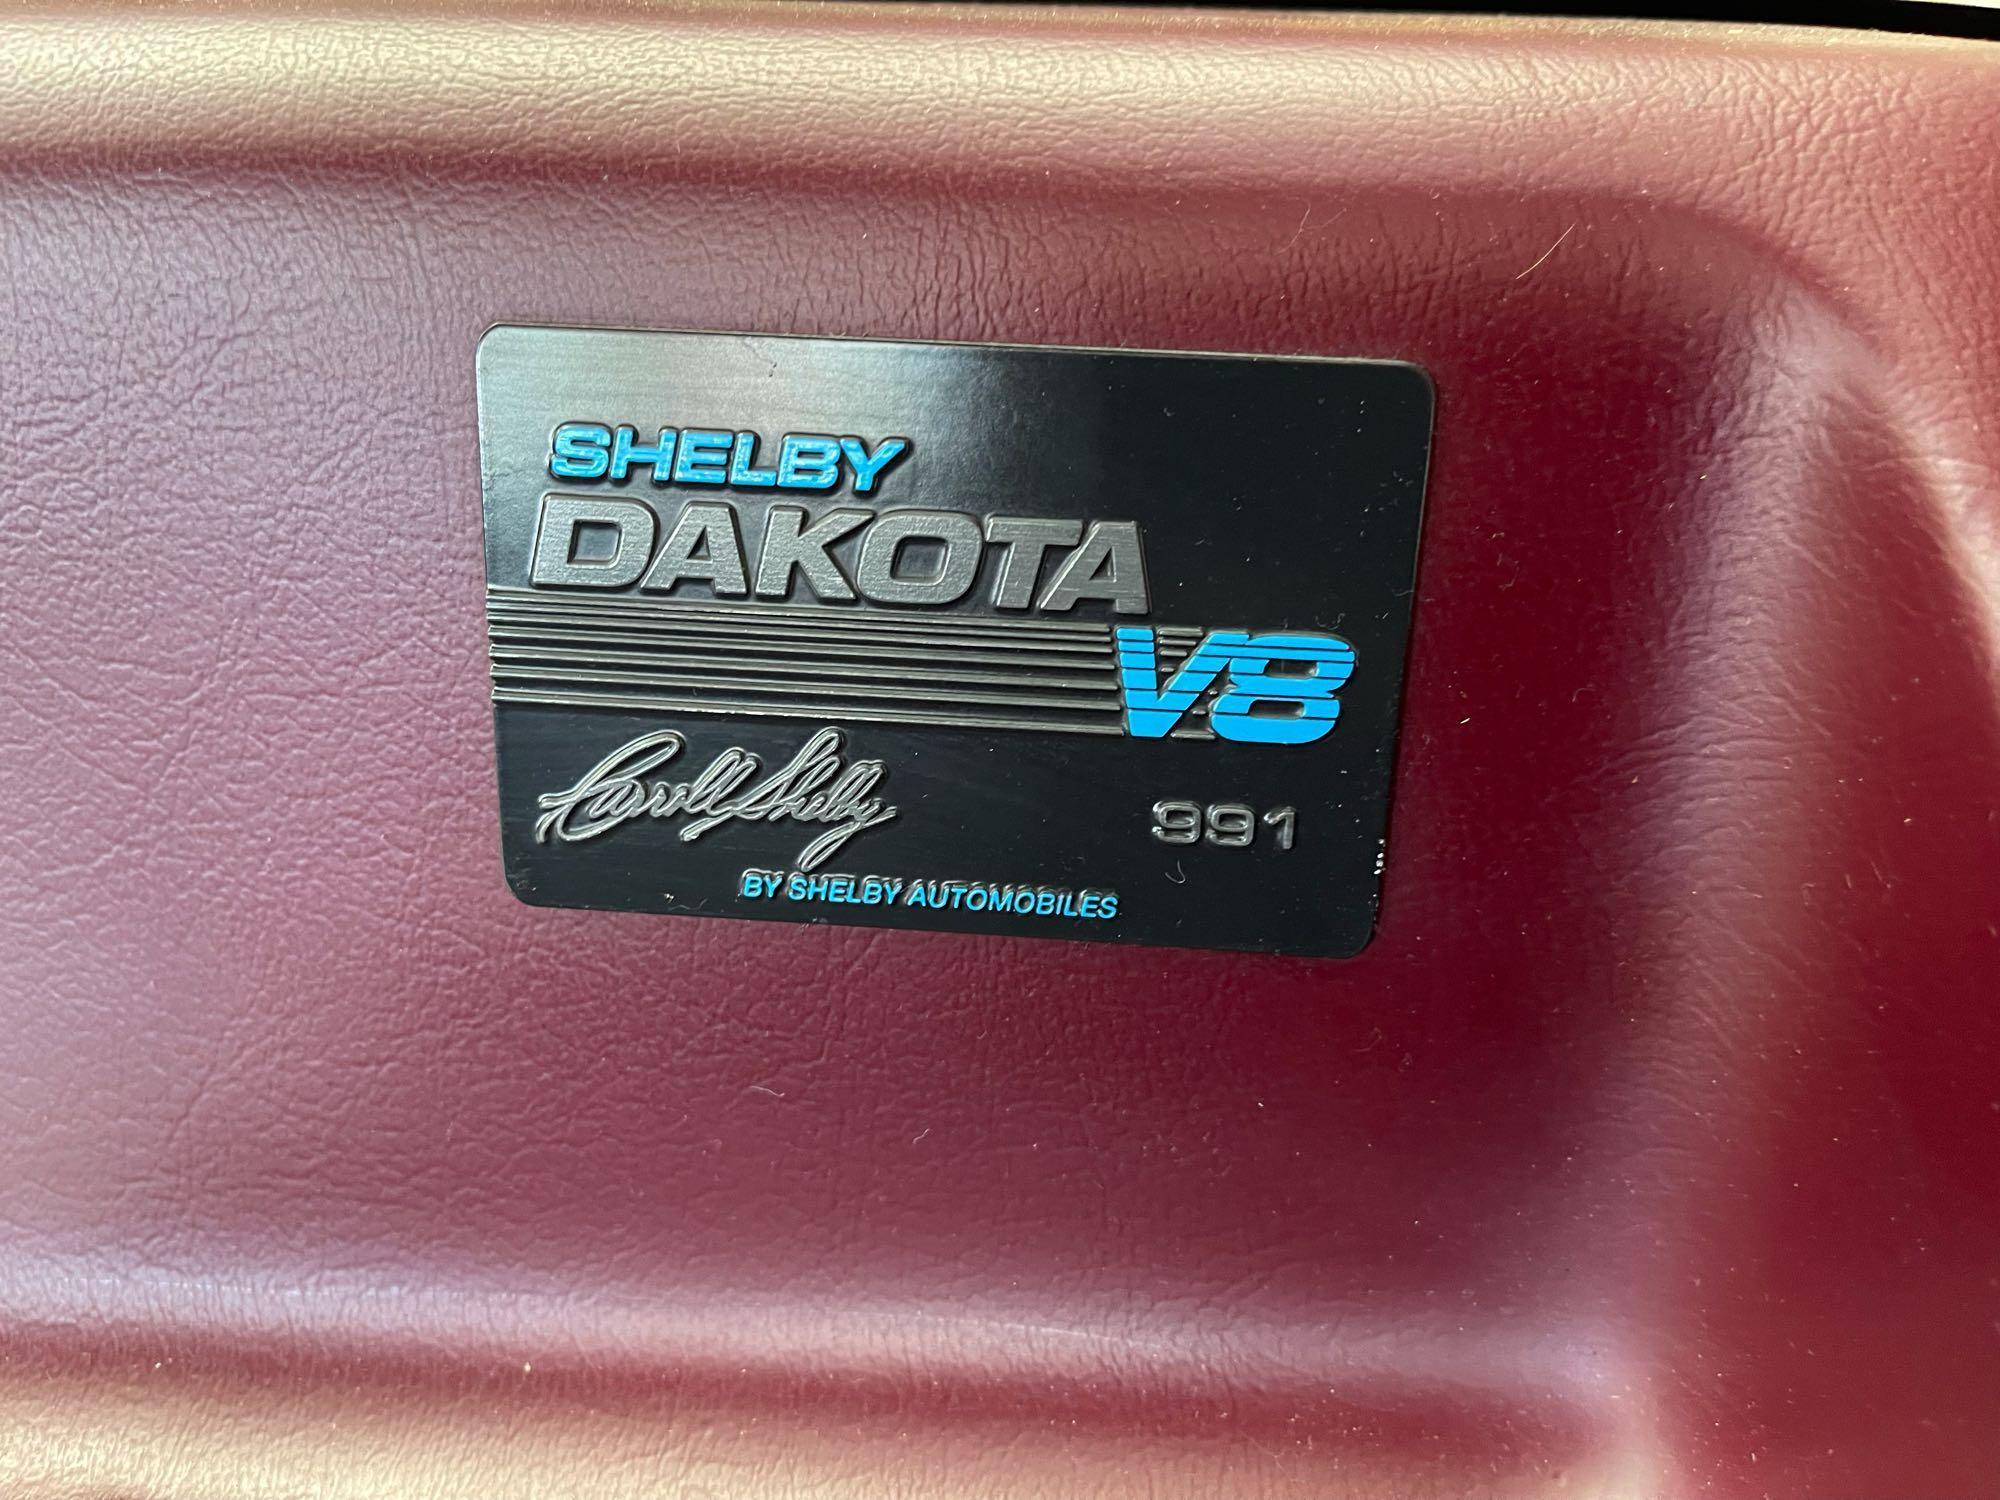 1989 Dodge Dakota Shelby truck w/408 C.I. engine, 425HP, engine like new